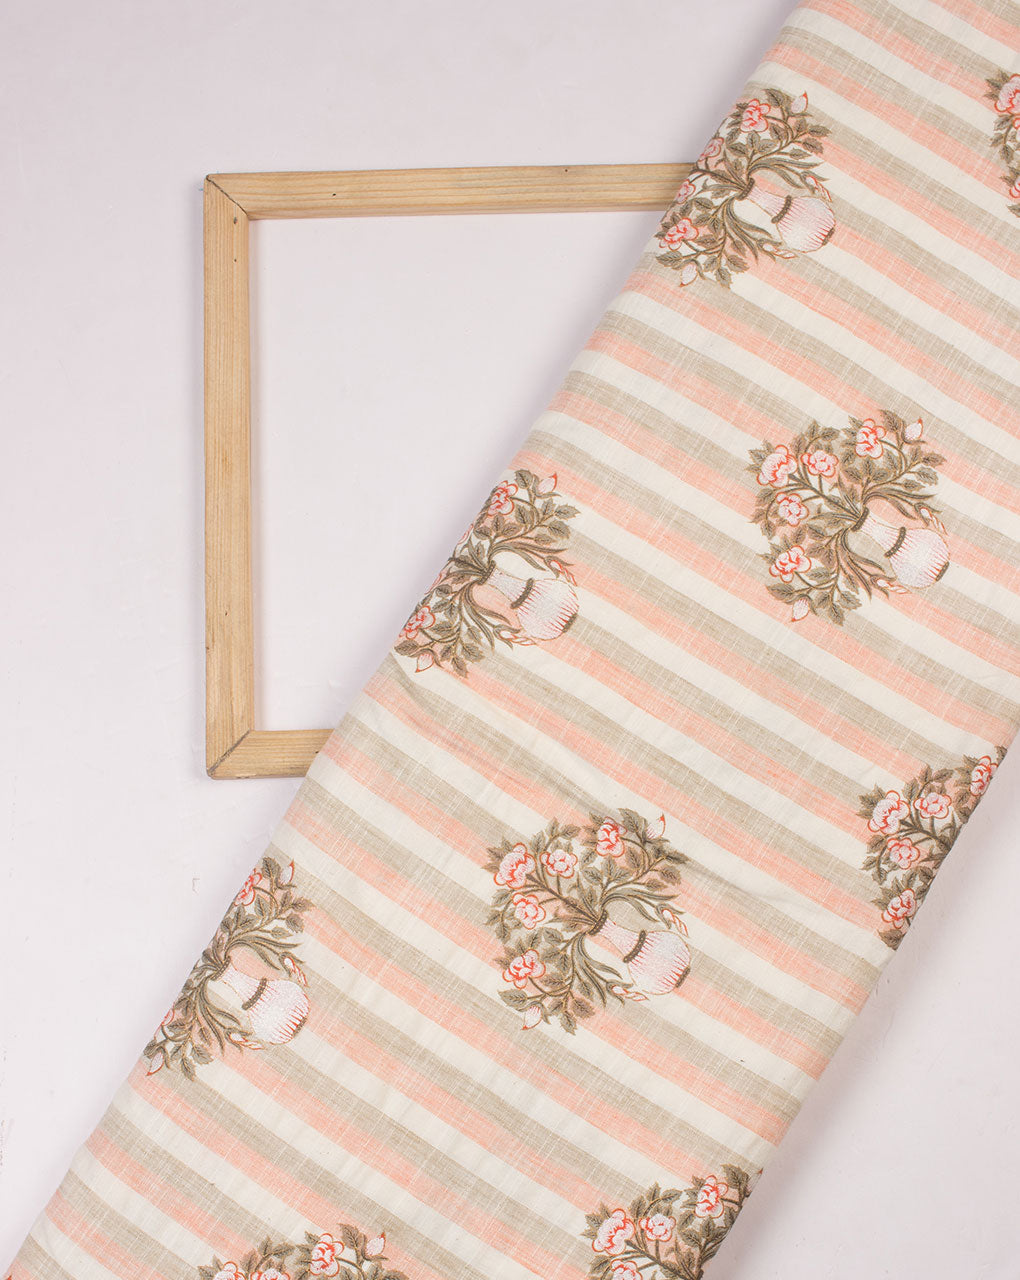 Woven Loom Textured Foil Screen Print Cotton Fabric - Fabriclore.com